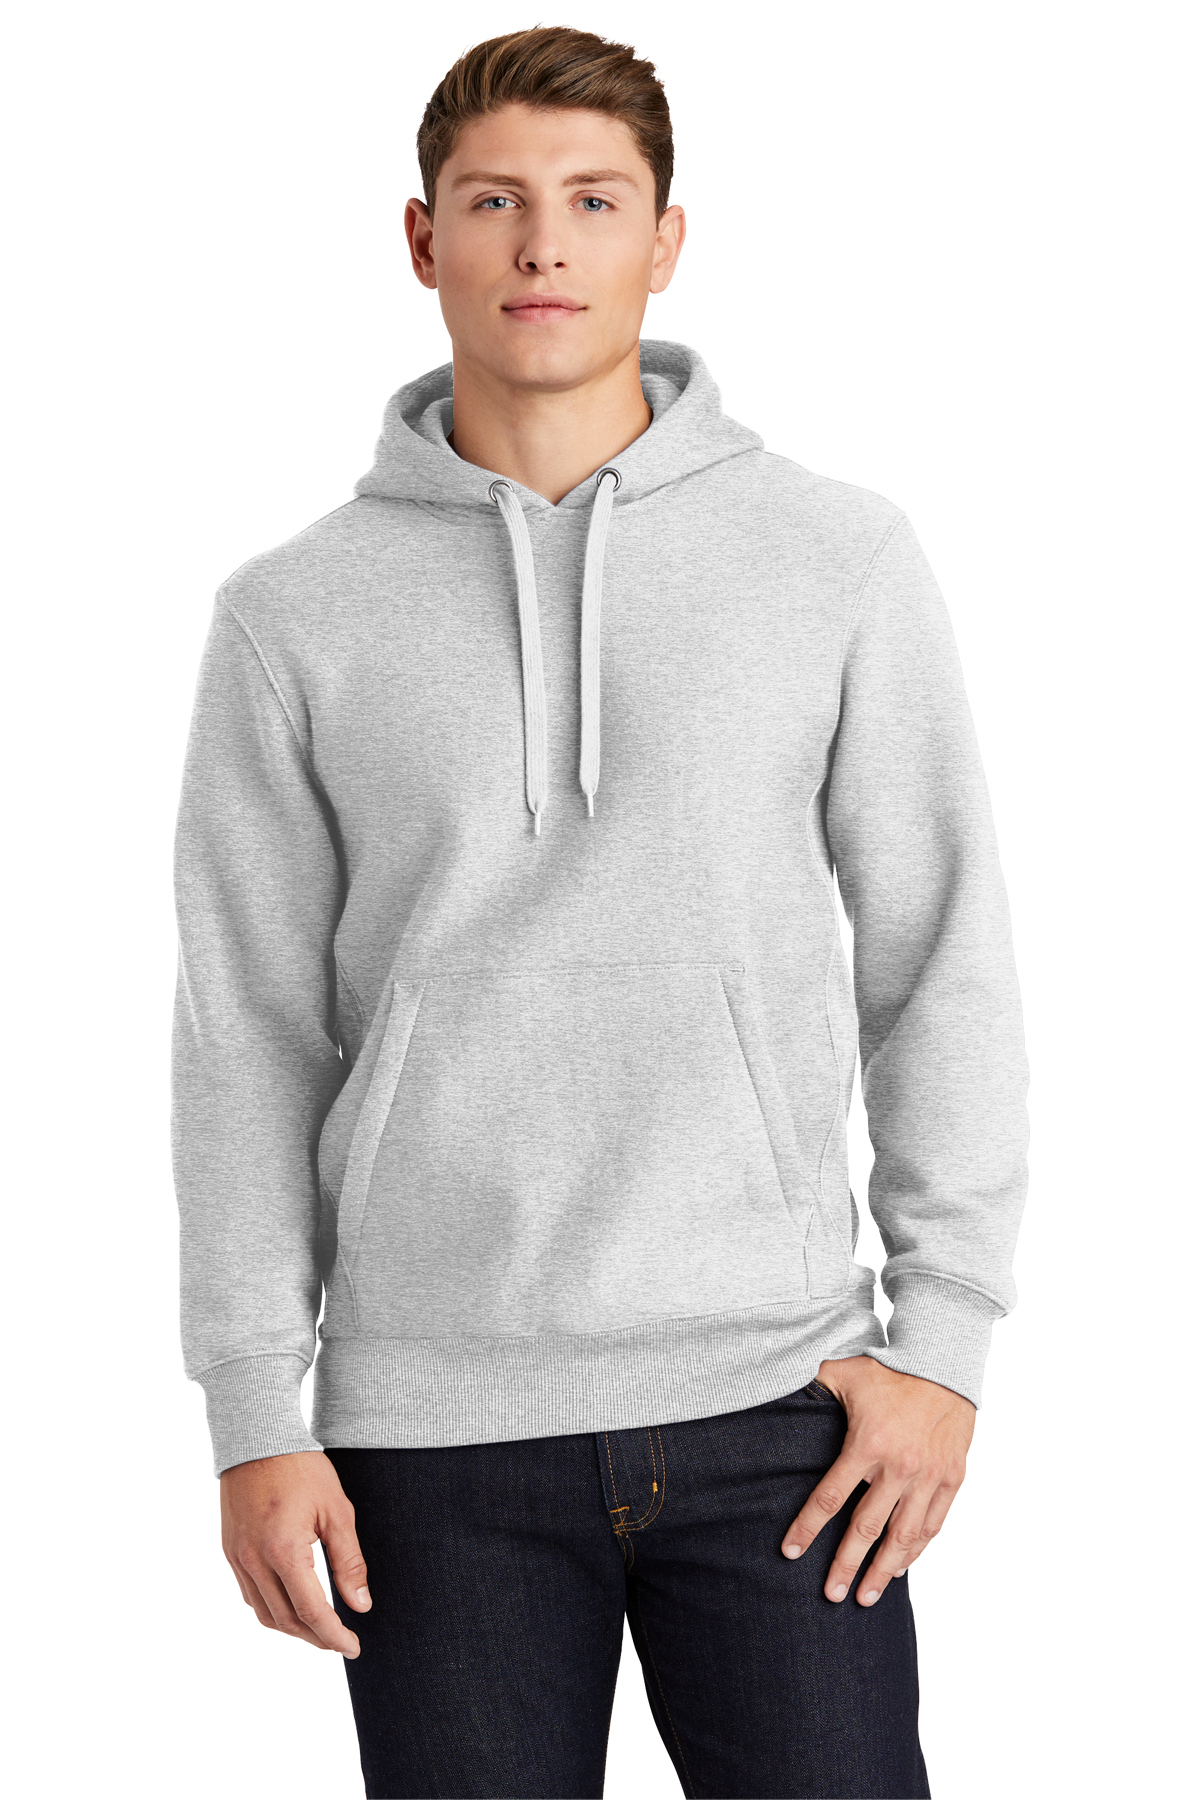 Sport-Tek Super Heavyweight Pullover Hooded Sweatshirt | Product ...